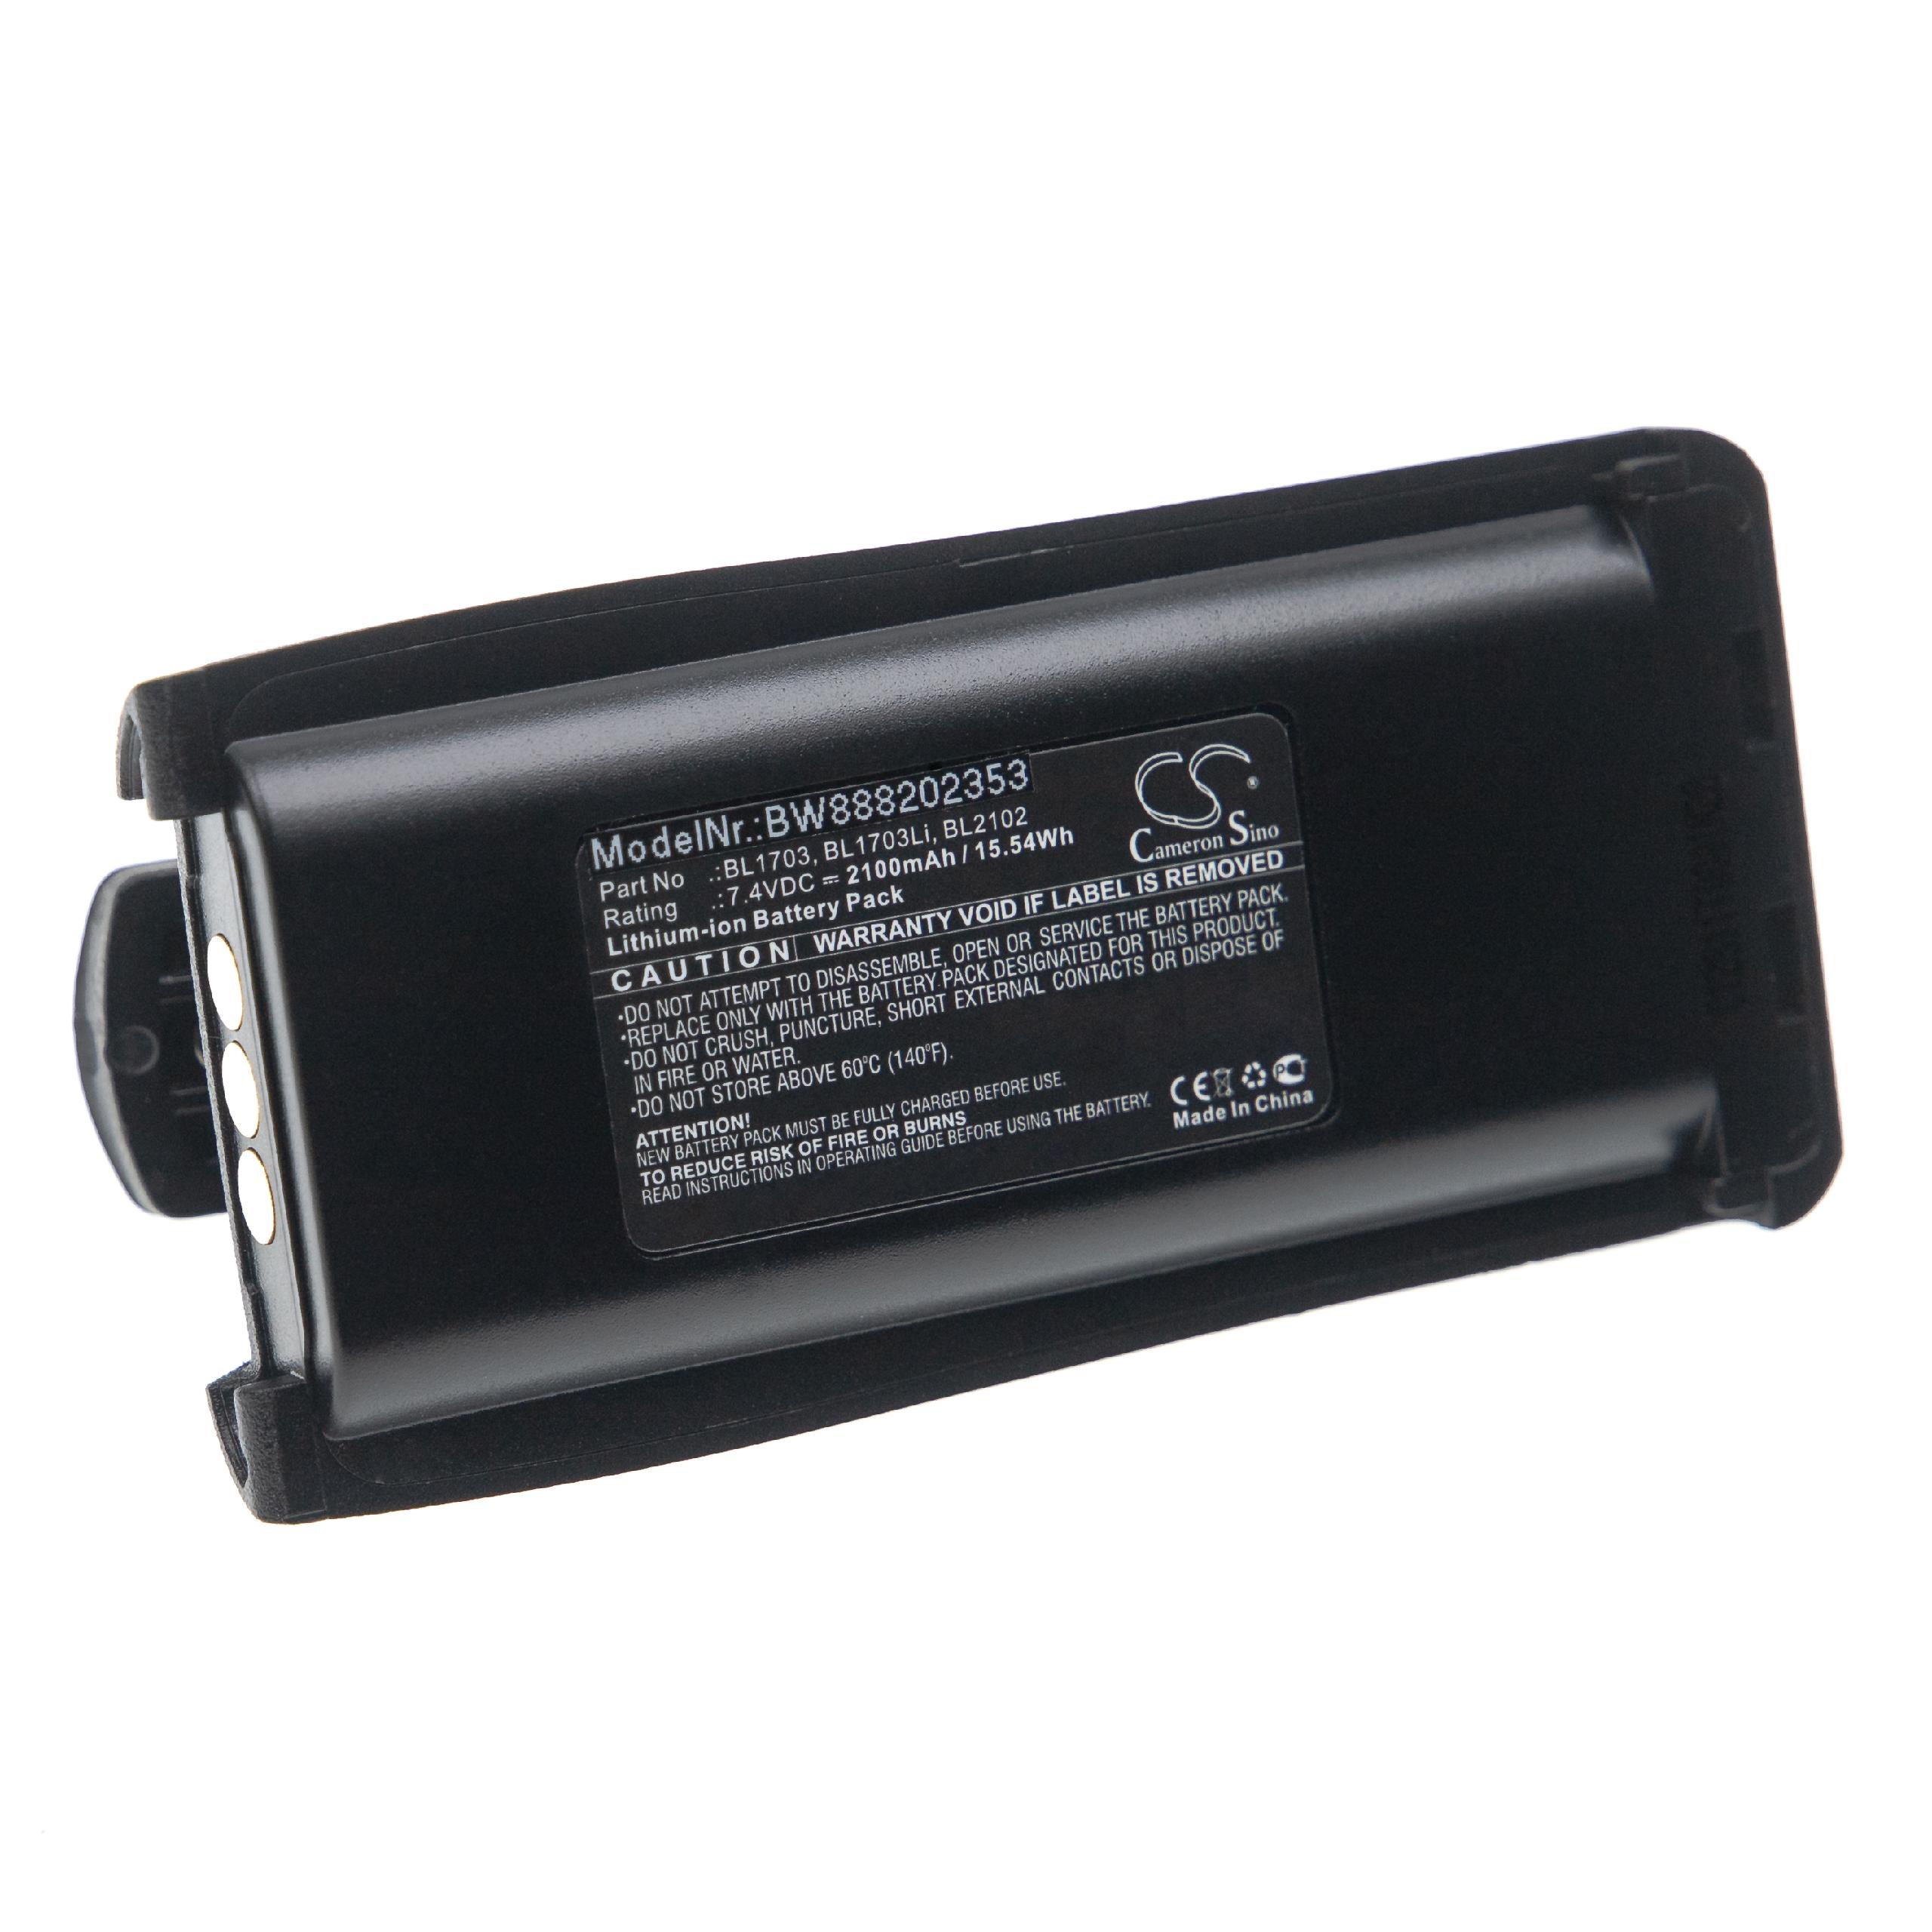 Batterie remplace Hyt BL2102, BL1703Li, BL1703, BH1801 pour radio talkie-walkie - 2100mAh 7,4V Li-ion